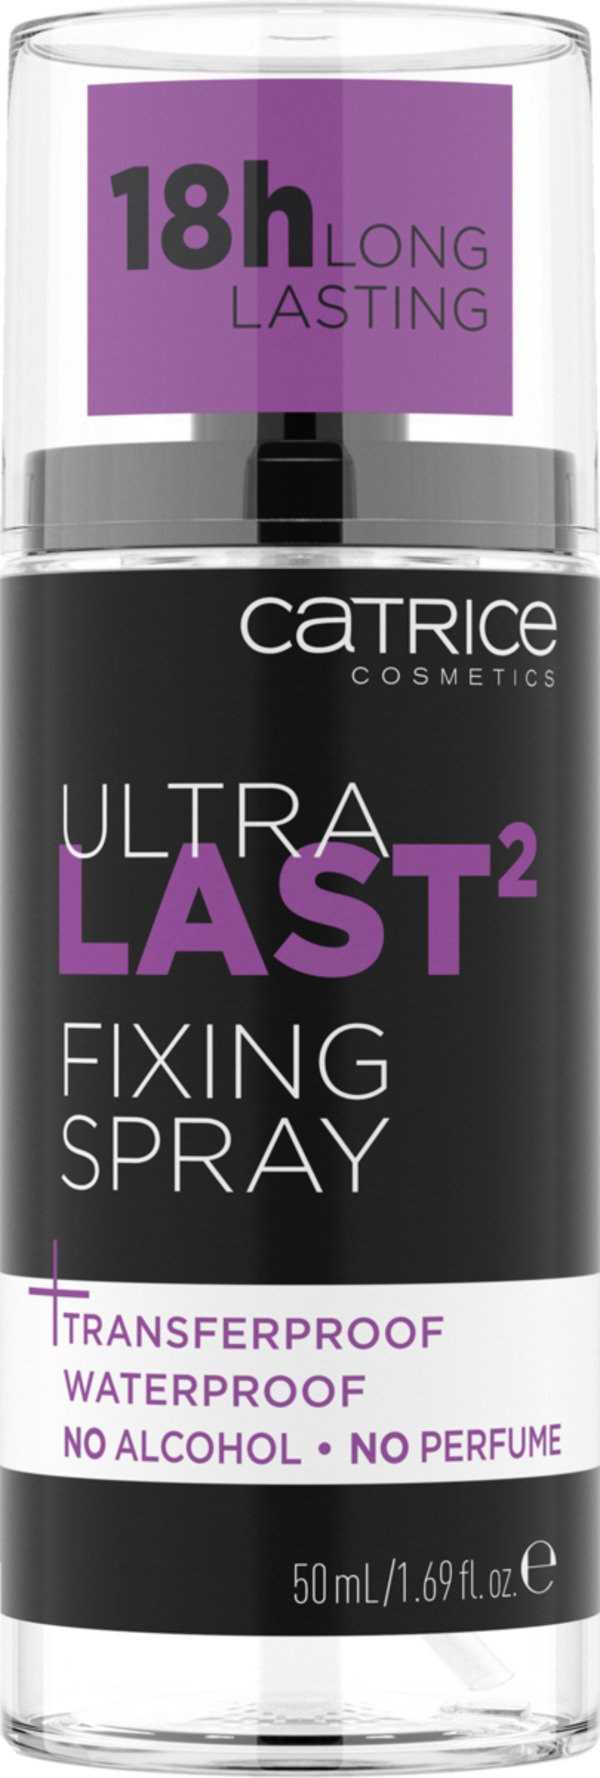 Bild 1 von Catrice Ultra Last2 Fixing Spray